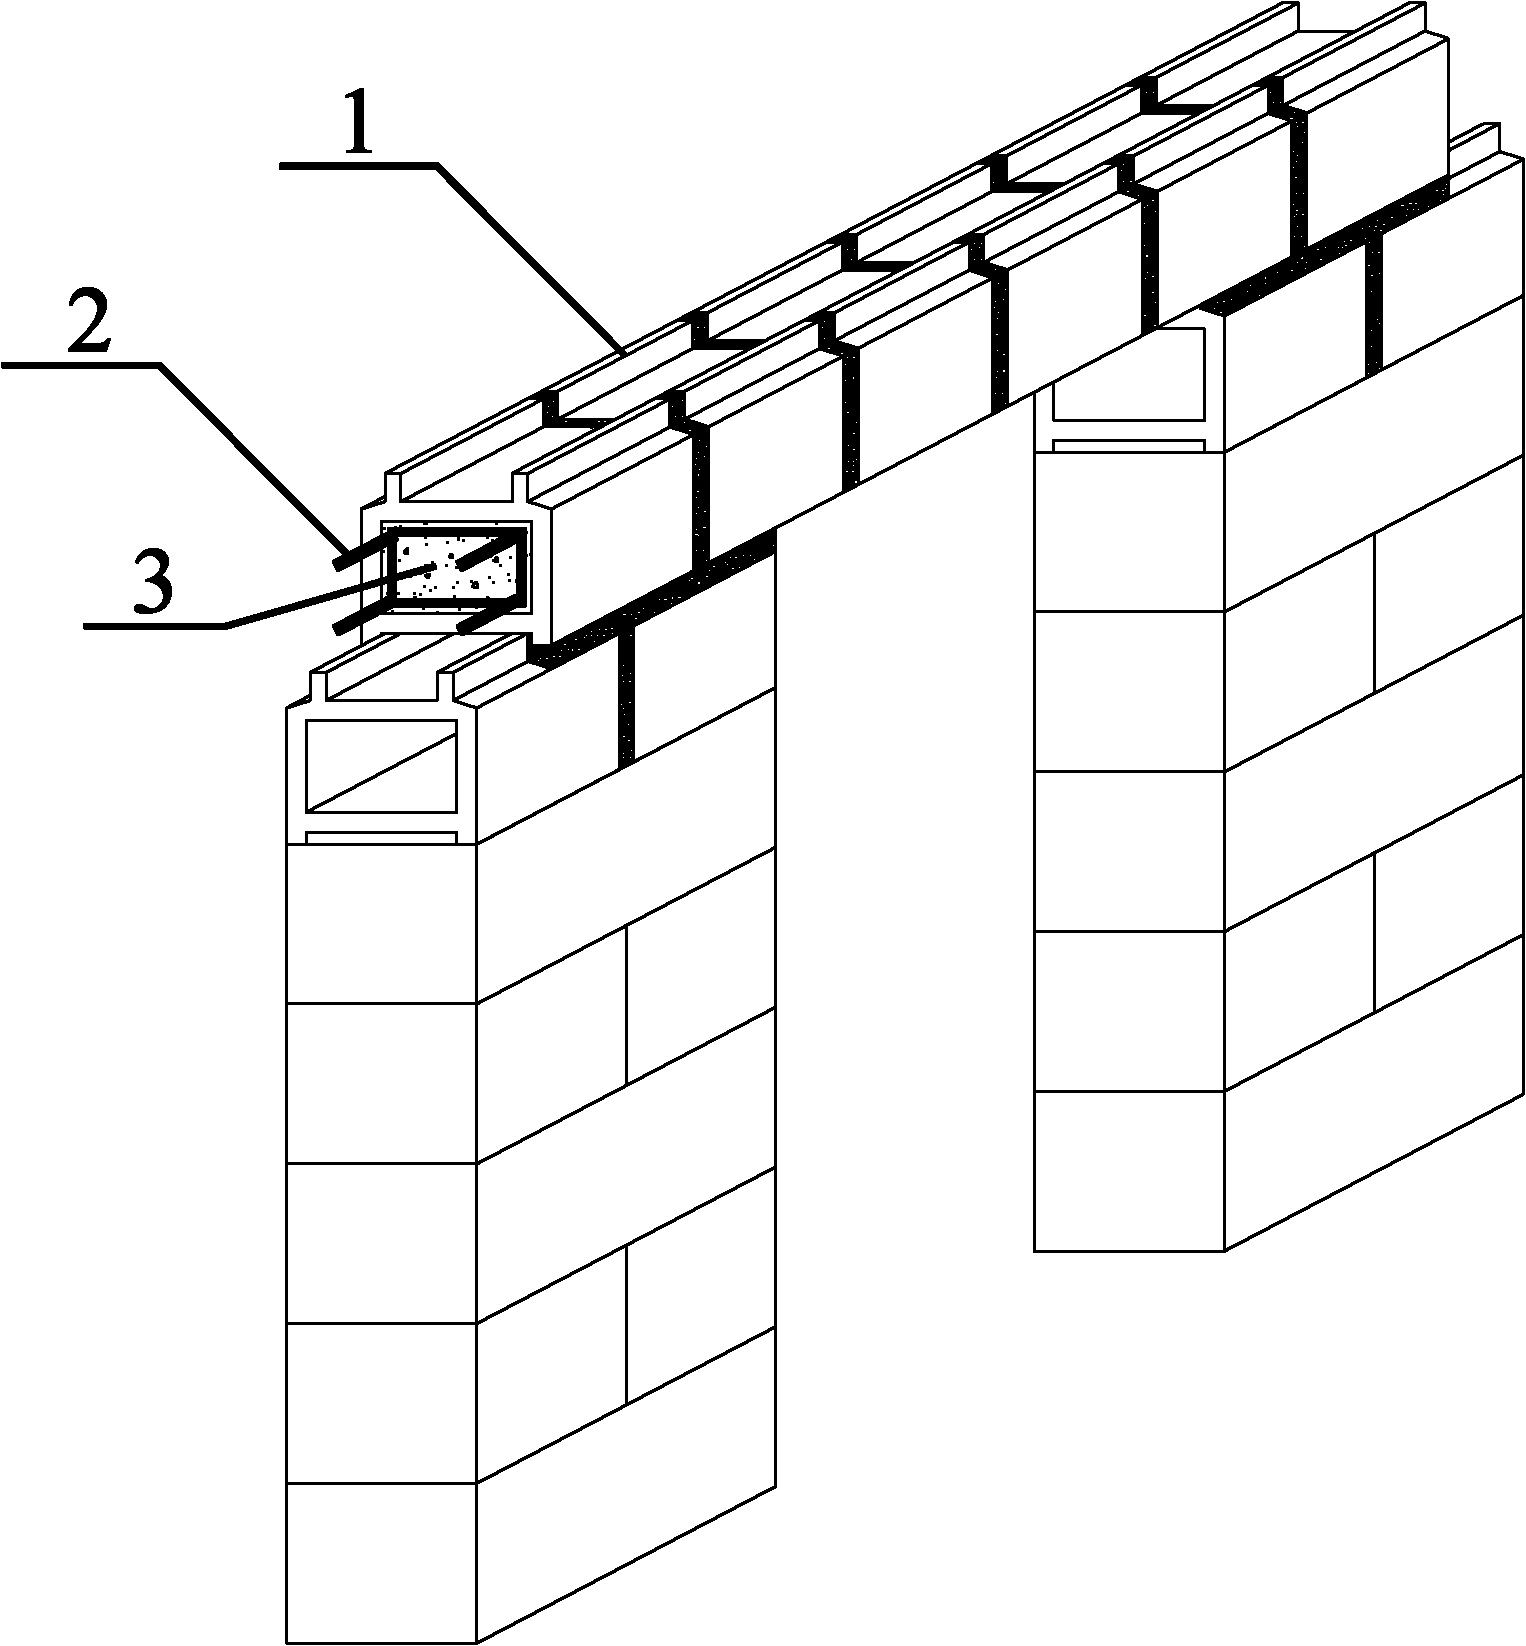 Method for constructing reinforced concrete lintel